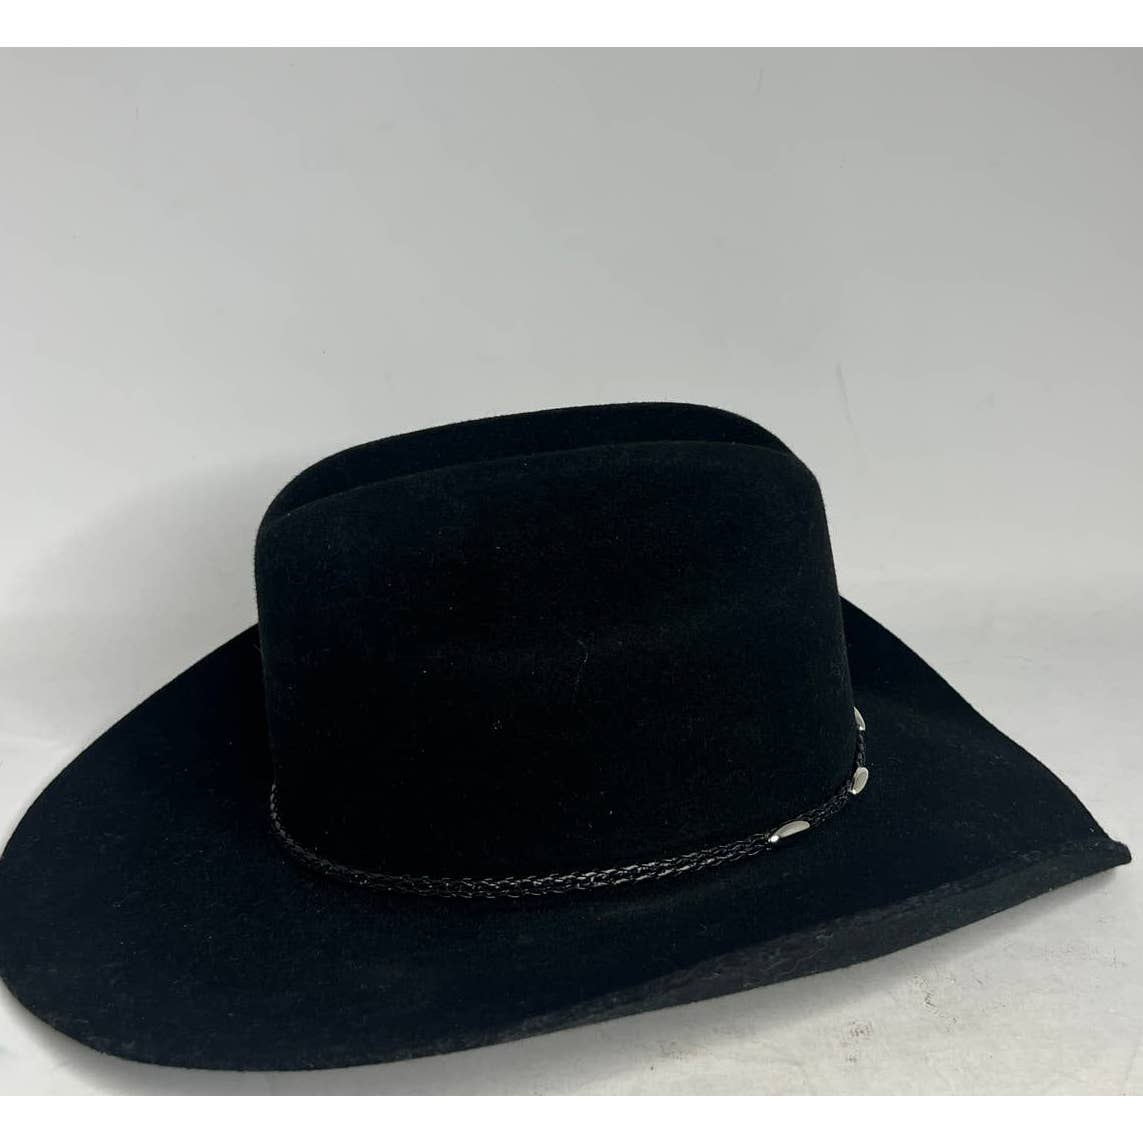 Cody James Black Cowboy Hat 3X Wool Blend 59 7 3/8